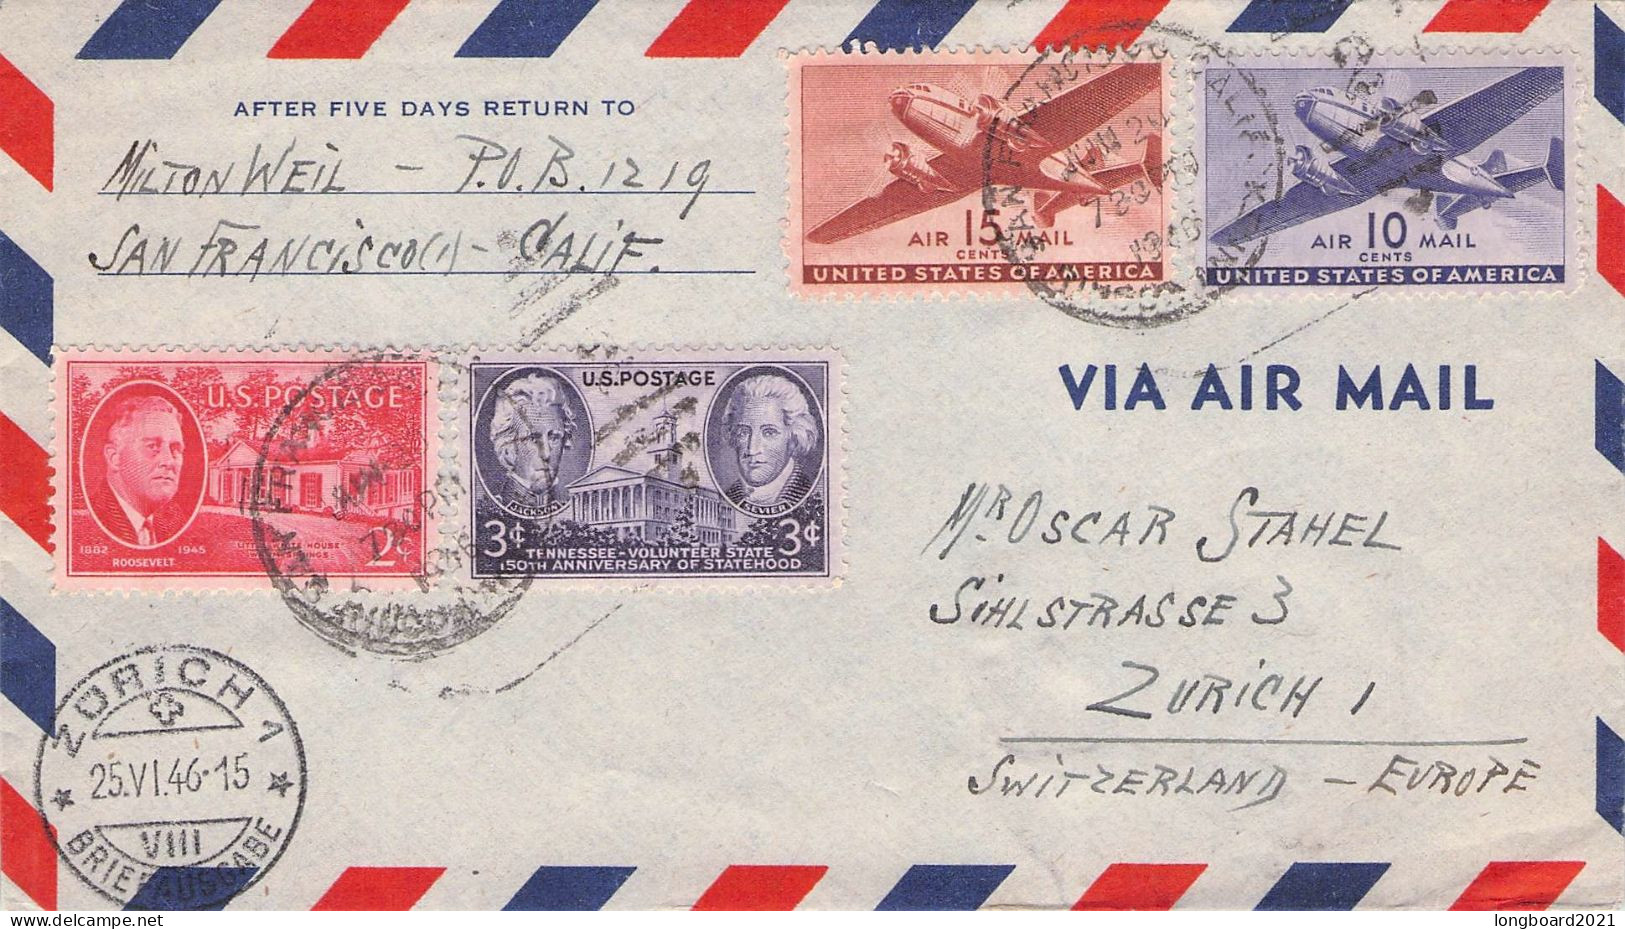 USA - MAIL 1946 SAN FRANCISCO - ZÜRICH/CH / 5042 - Lettres & Documents